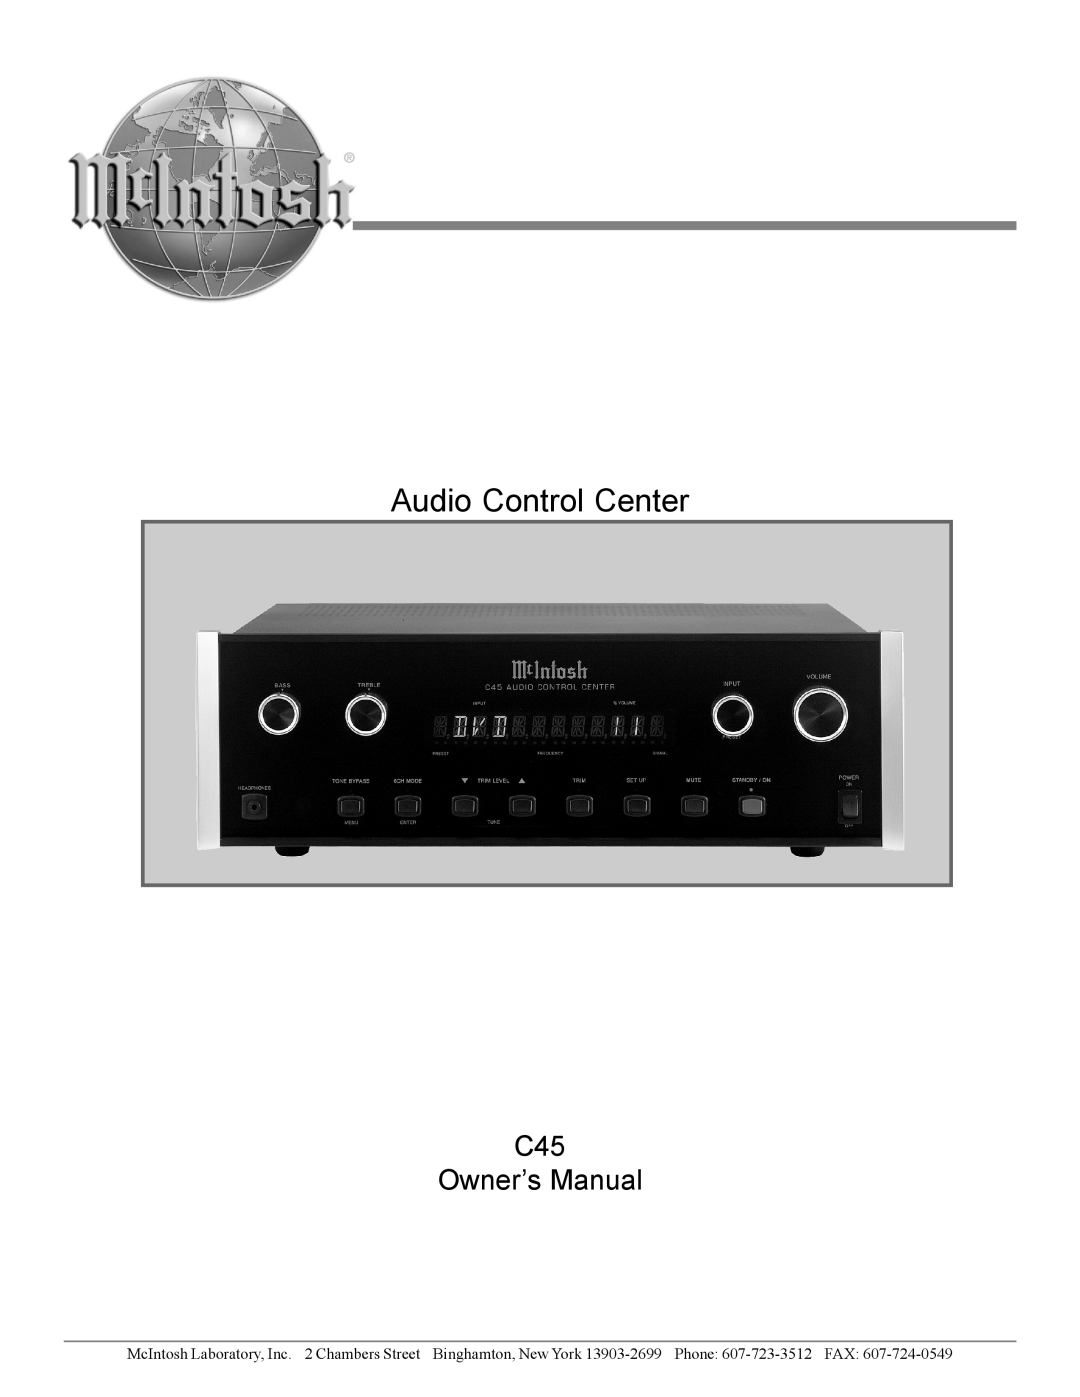 McIntosh owner manual Audio Control Center, C45 Owner’s Manual 